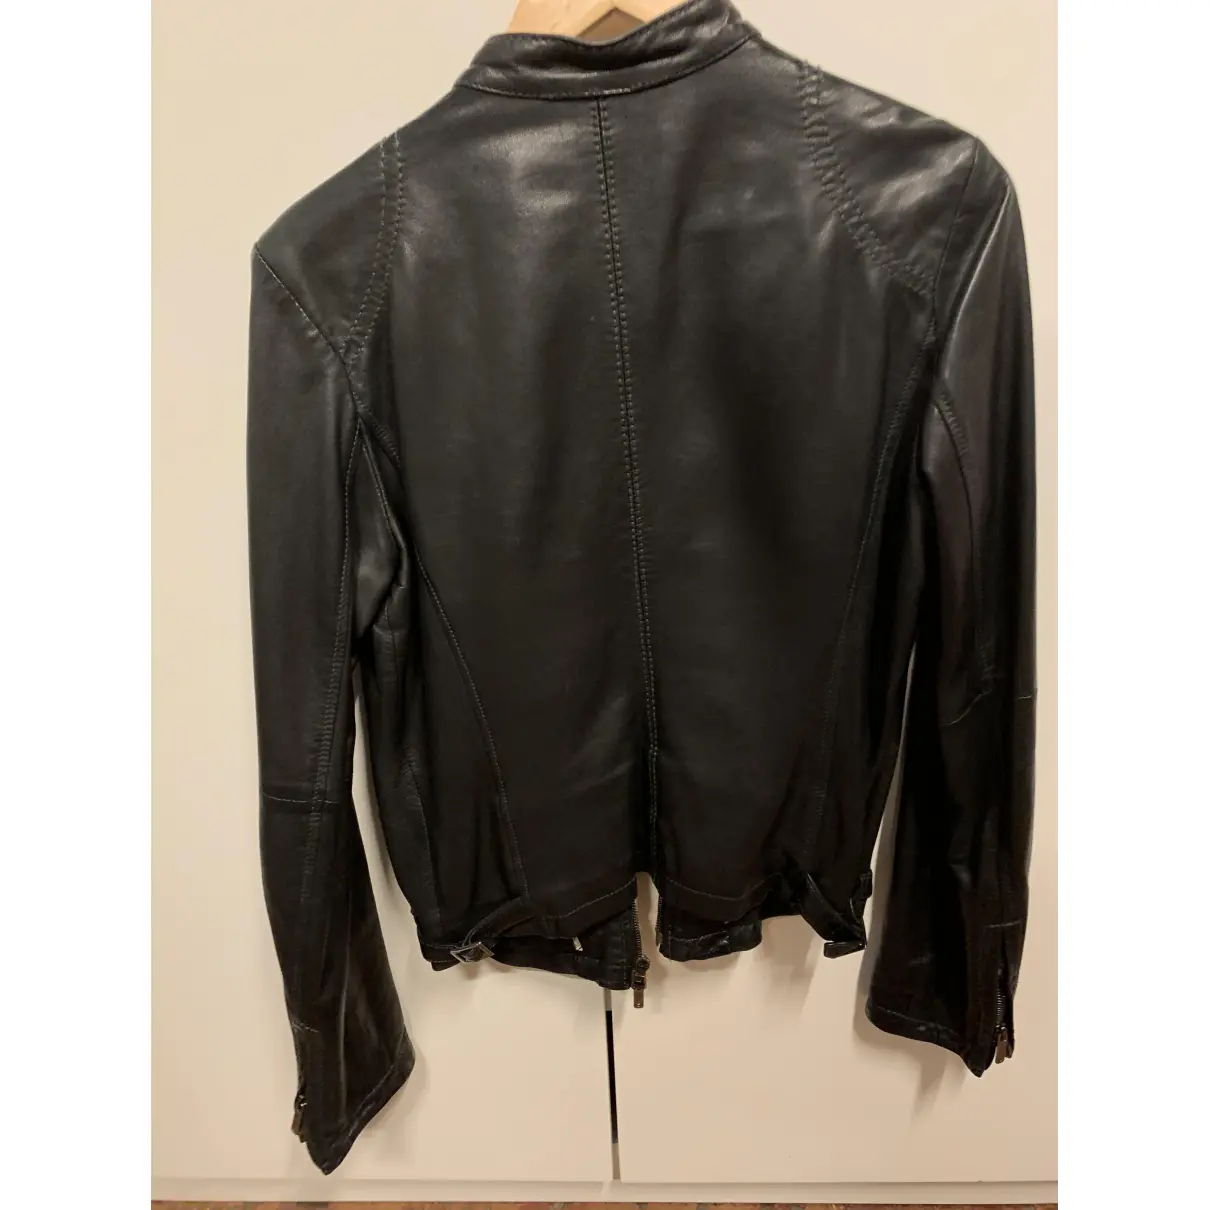 Buy Emporio Armani Leather biker jacket online